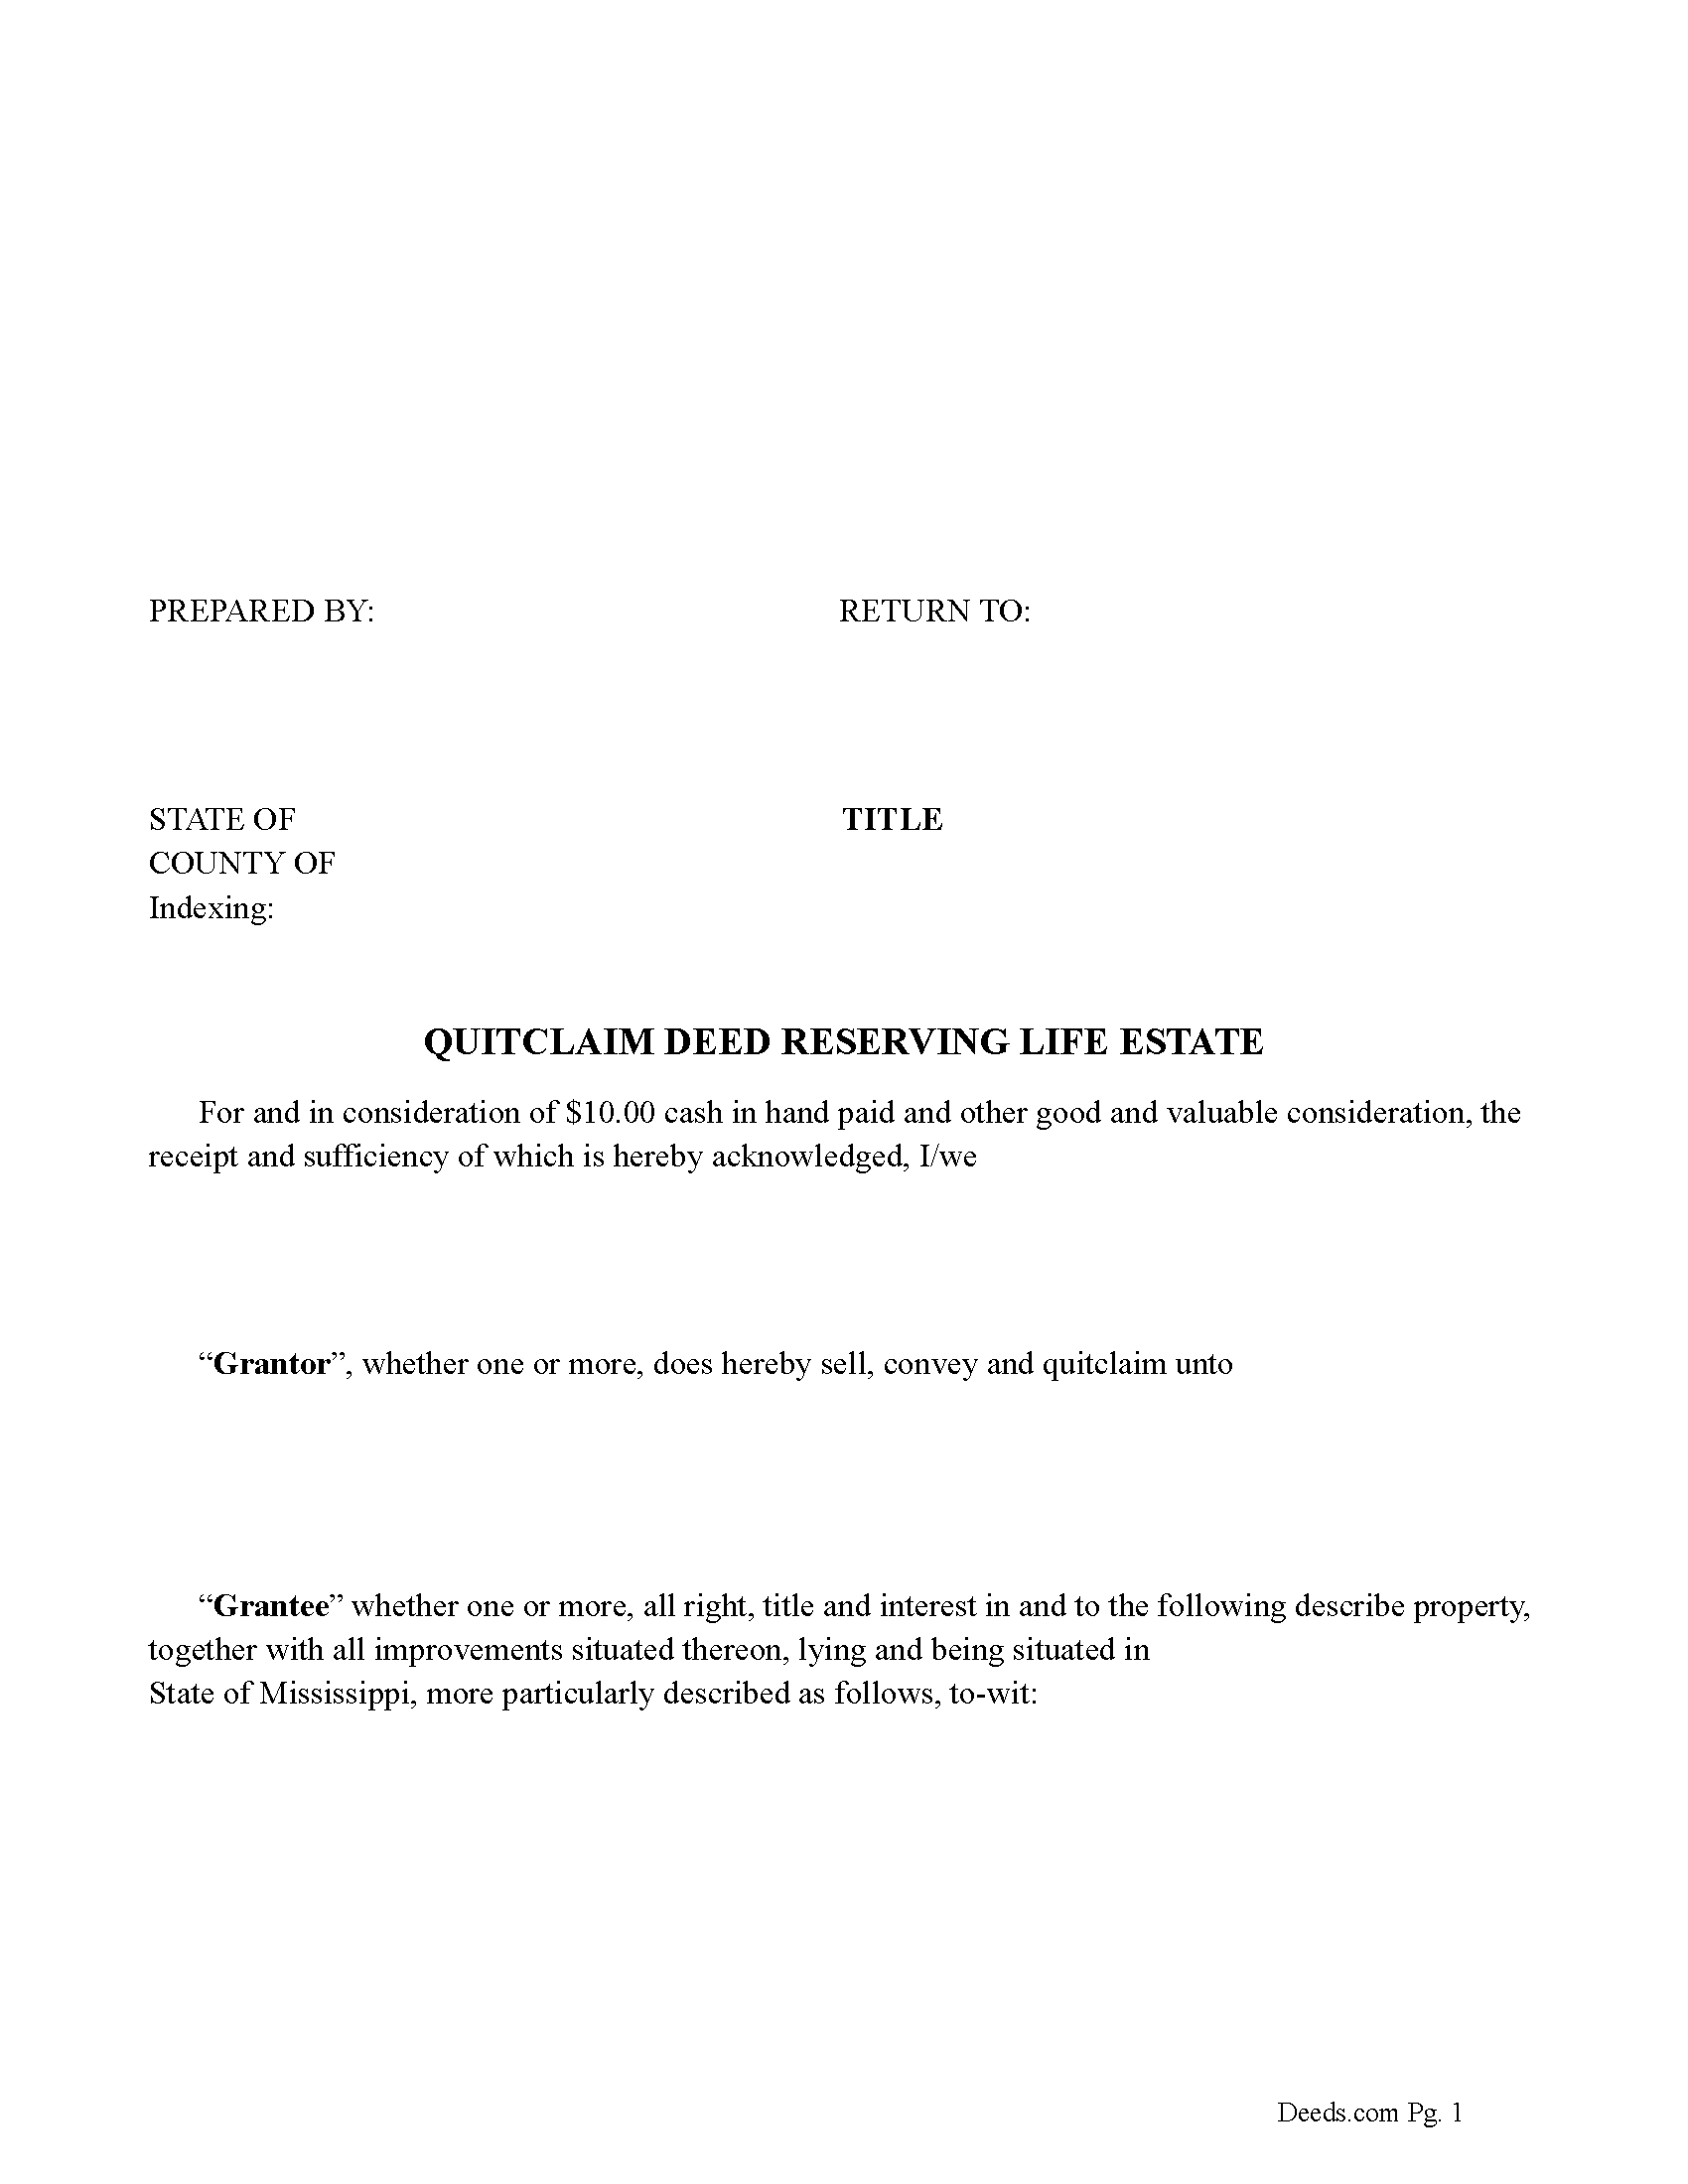 Quitclaim Deed Reserving Life Estate Form